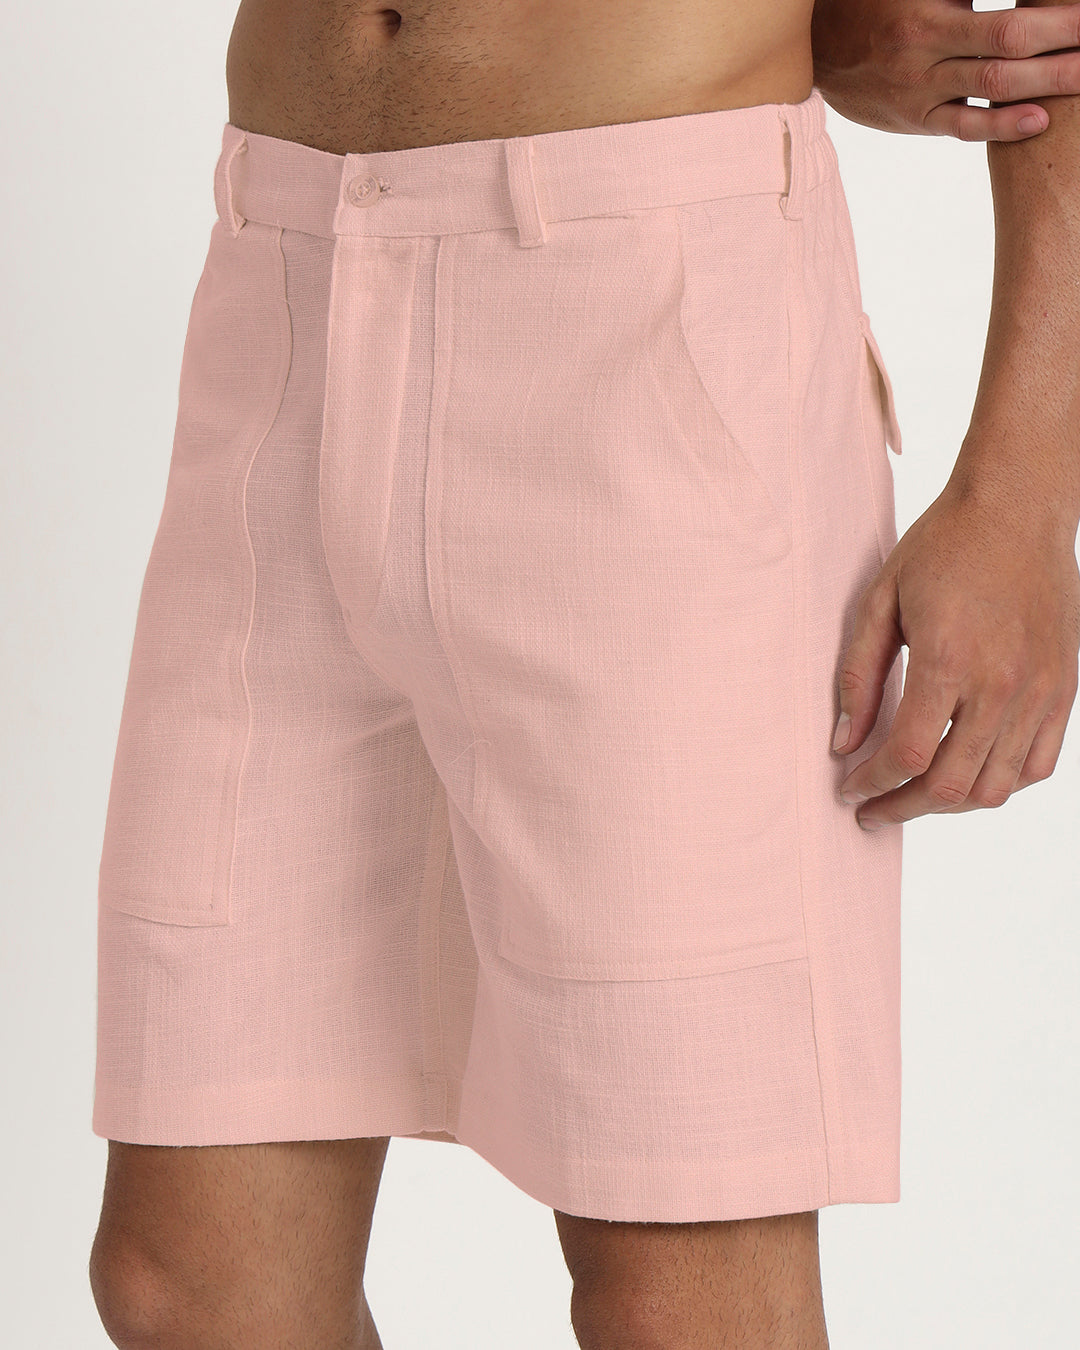 Combo : Patch Pocket Playtime Midnight Blue & Fondant Pink Men's Shorts